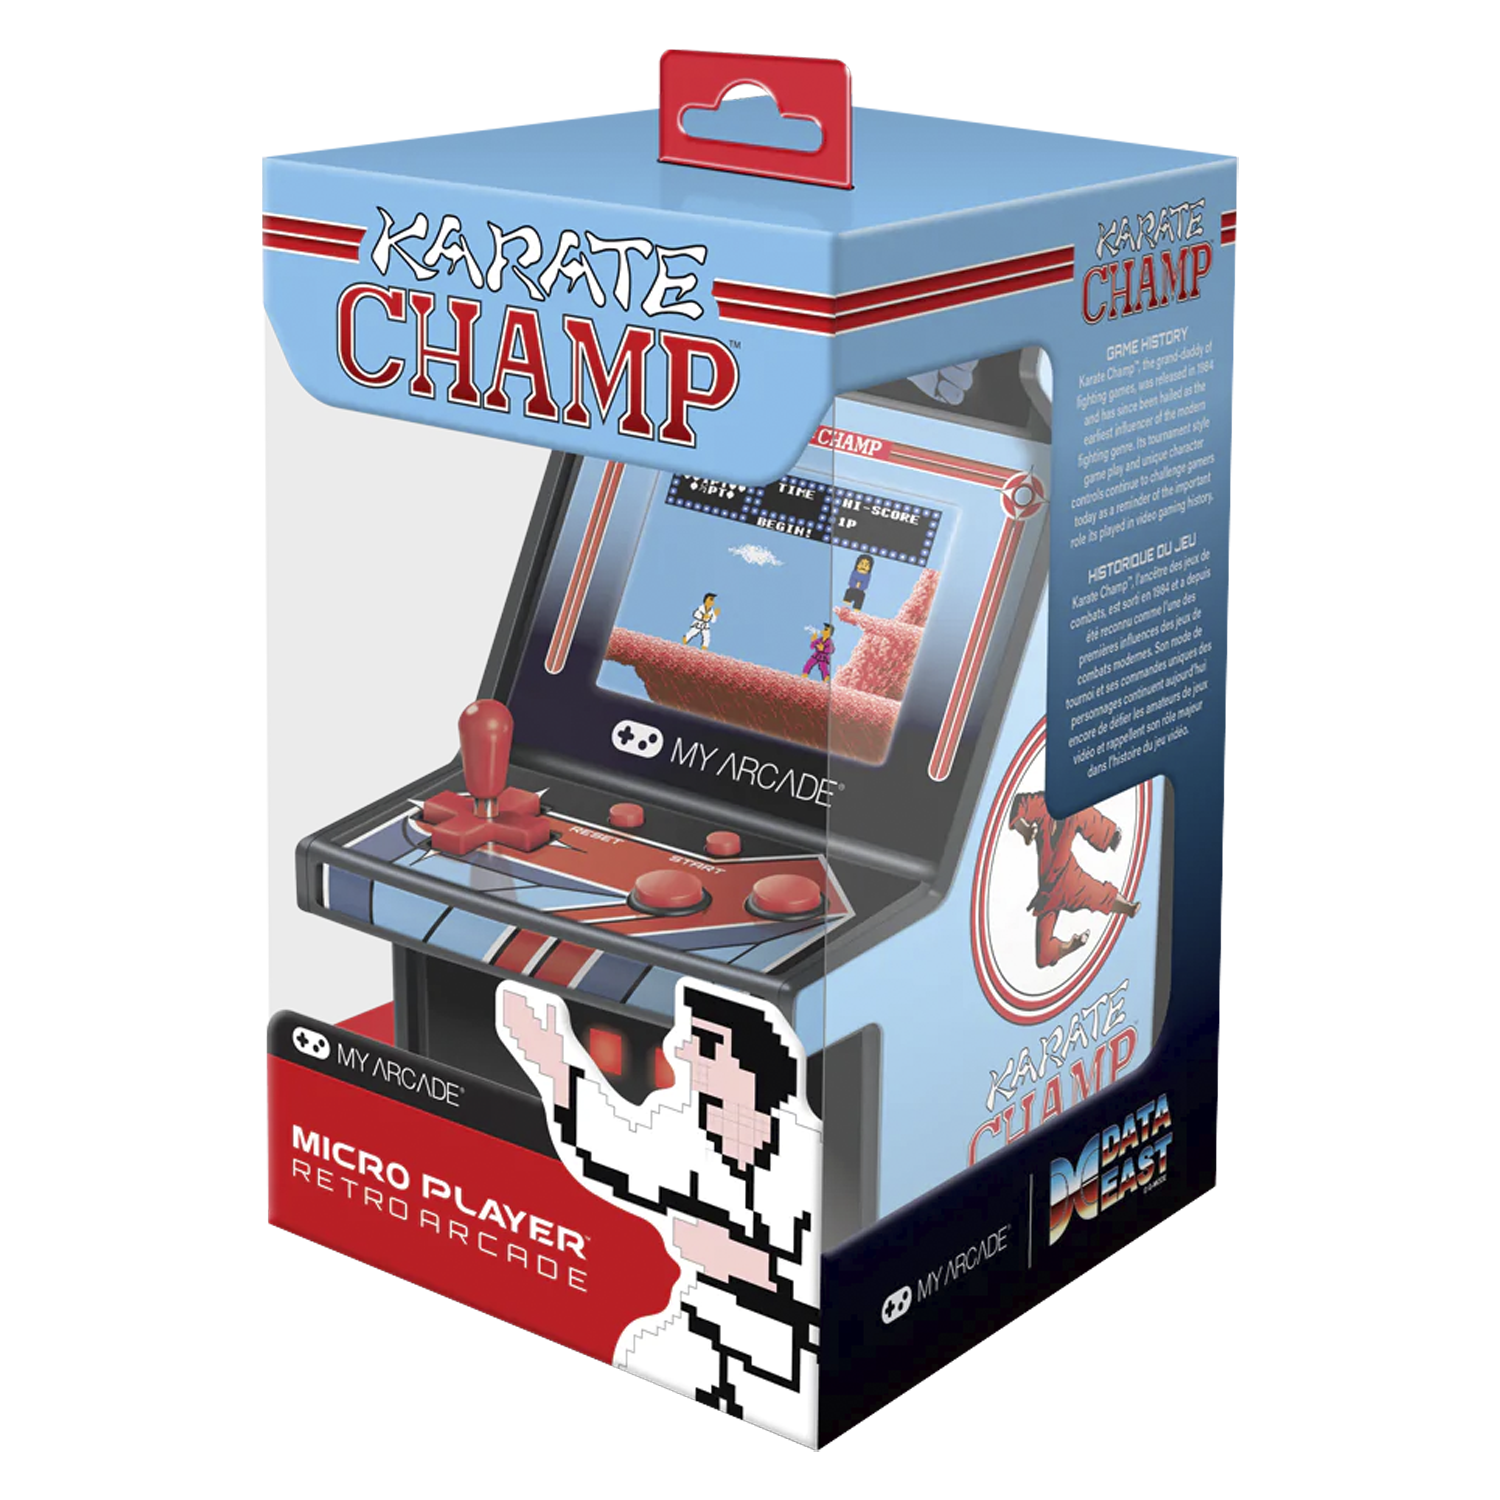 Console My Arcade Karate Champ Micro Player - DGUNL-3204